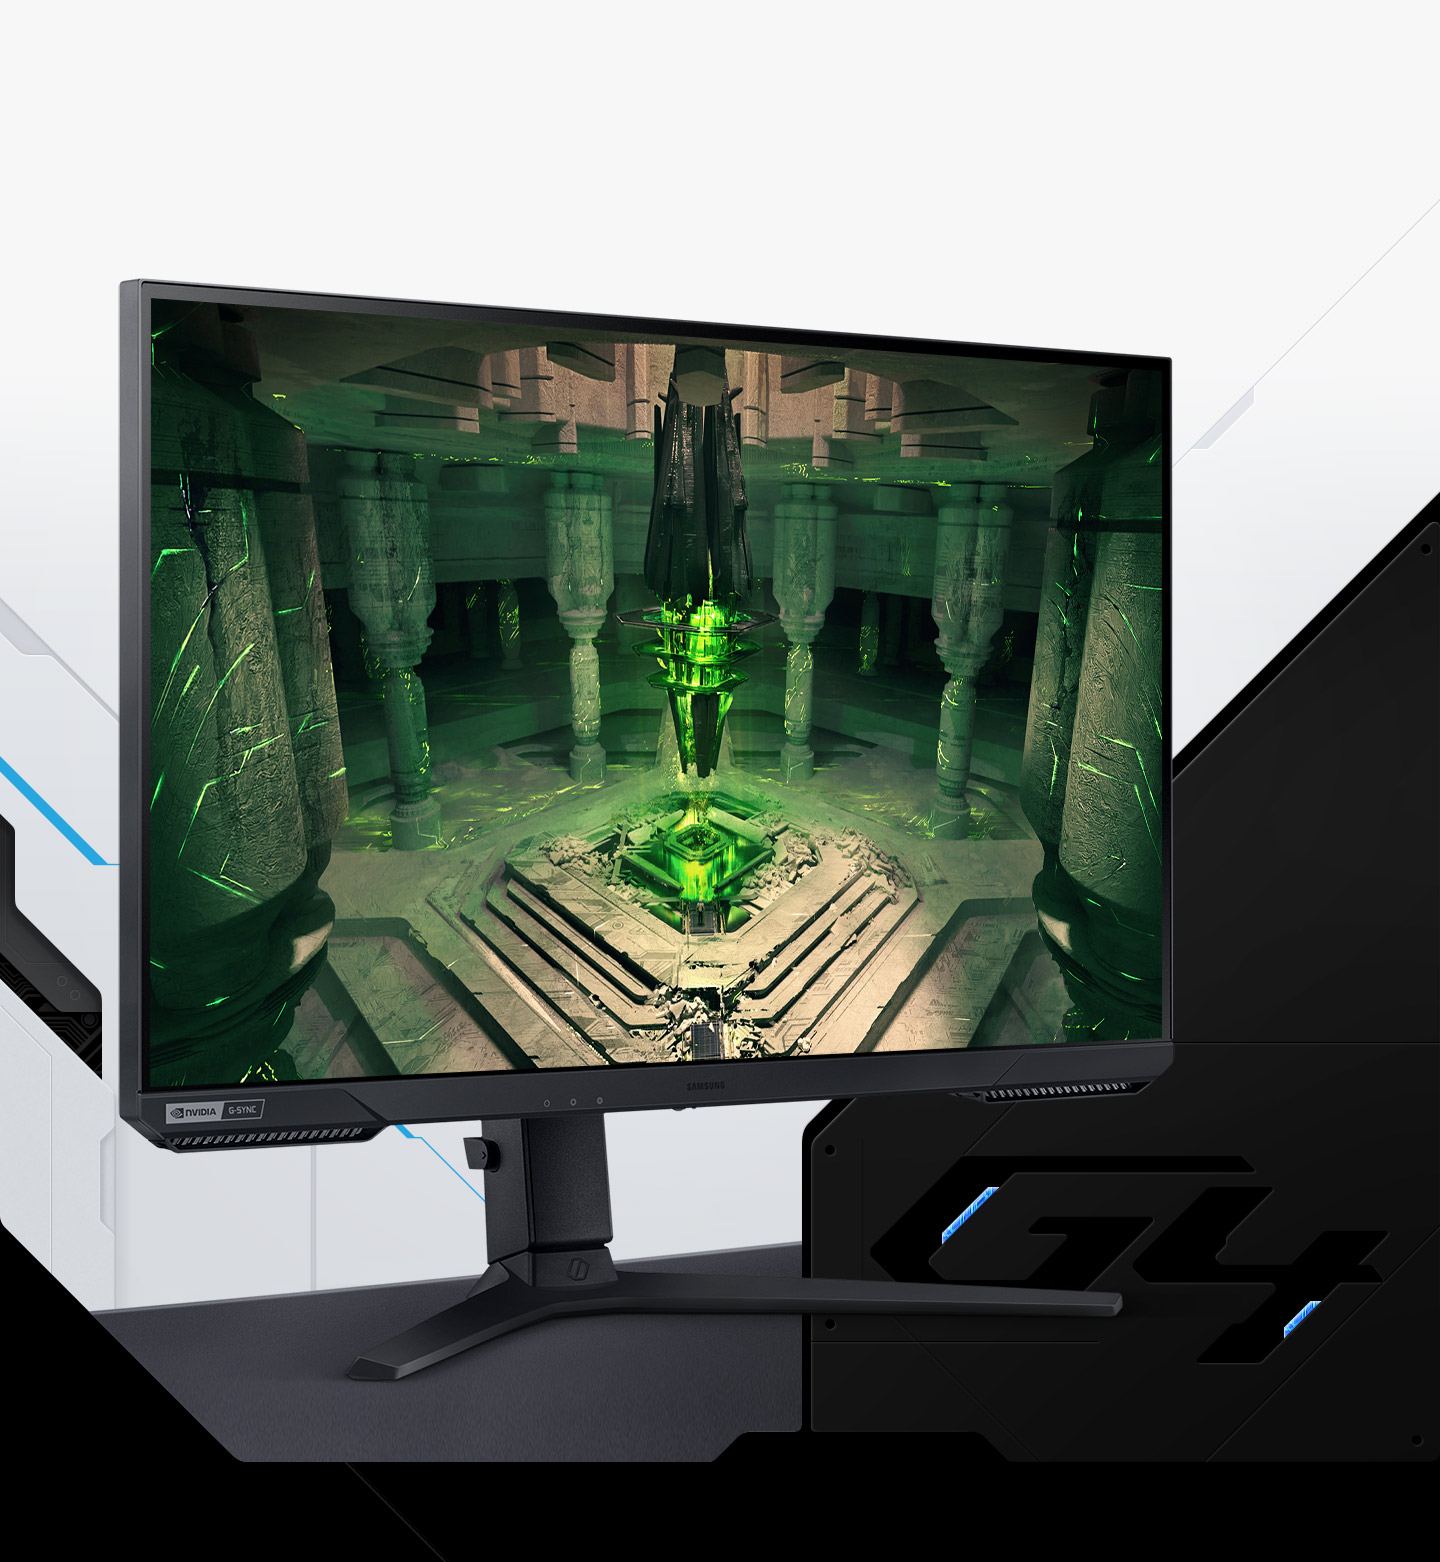 Monitor Gaming Odyssey G4 de 27. FHD, 240Hz, 1ms (GTG